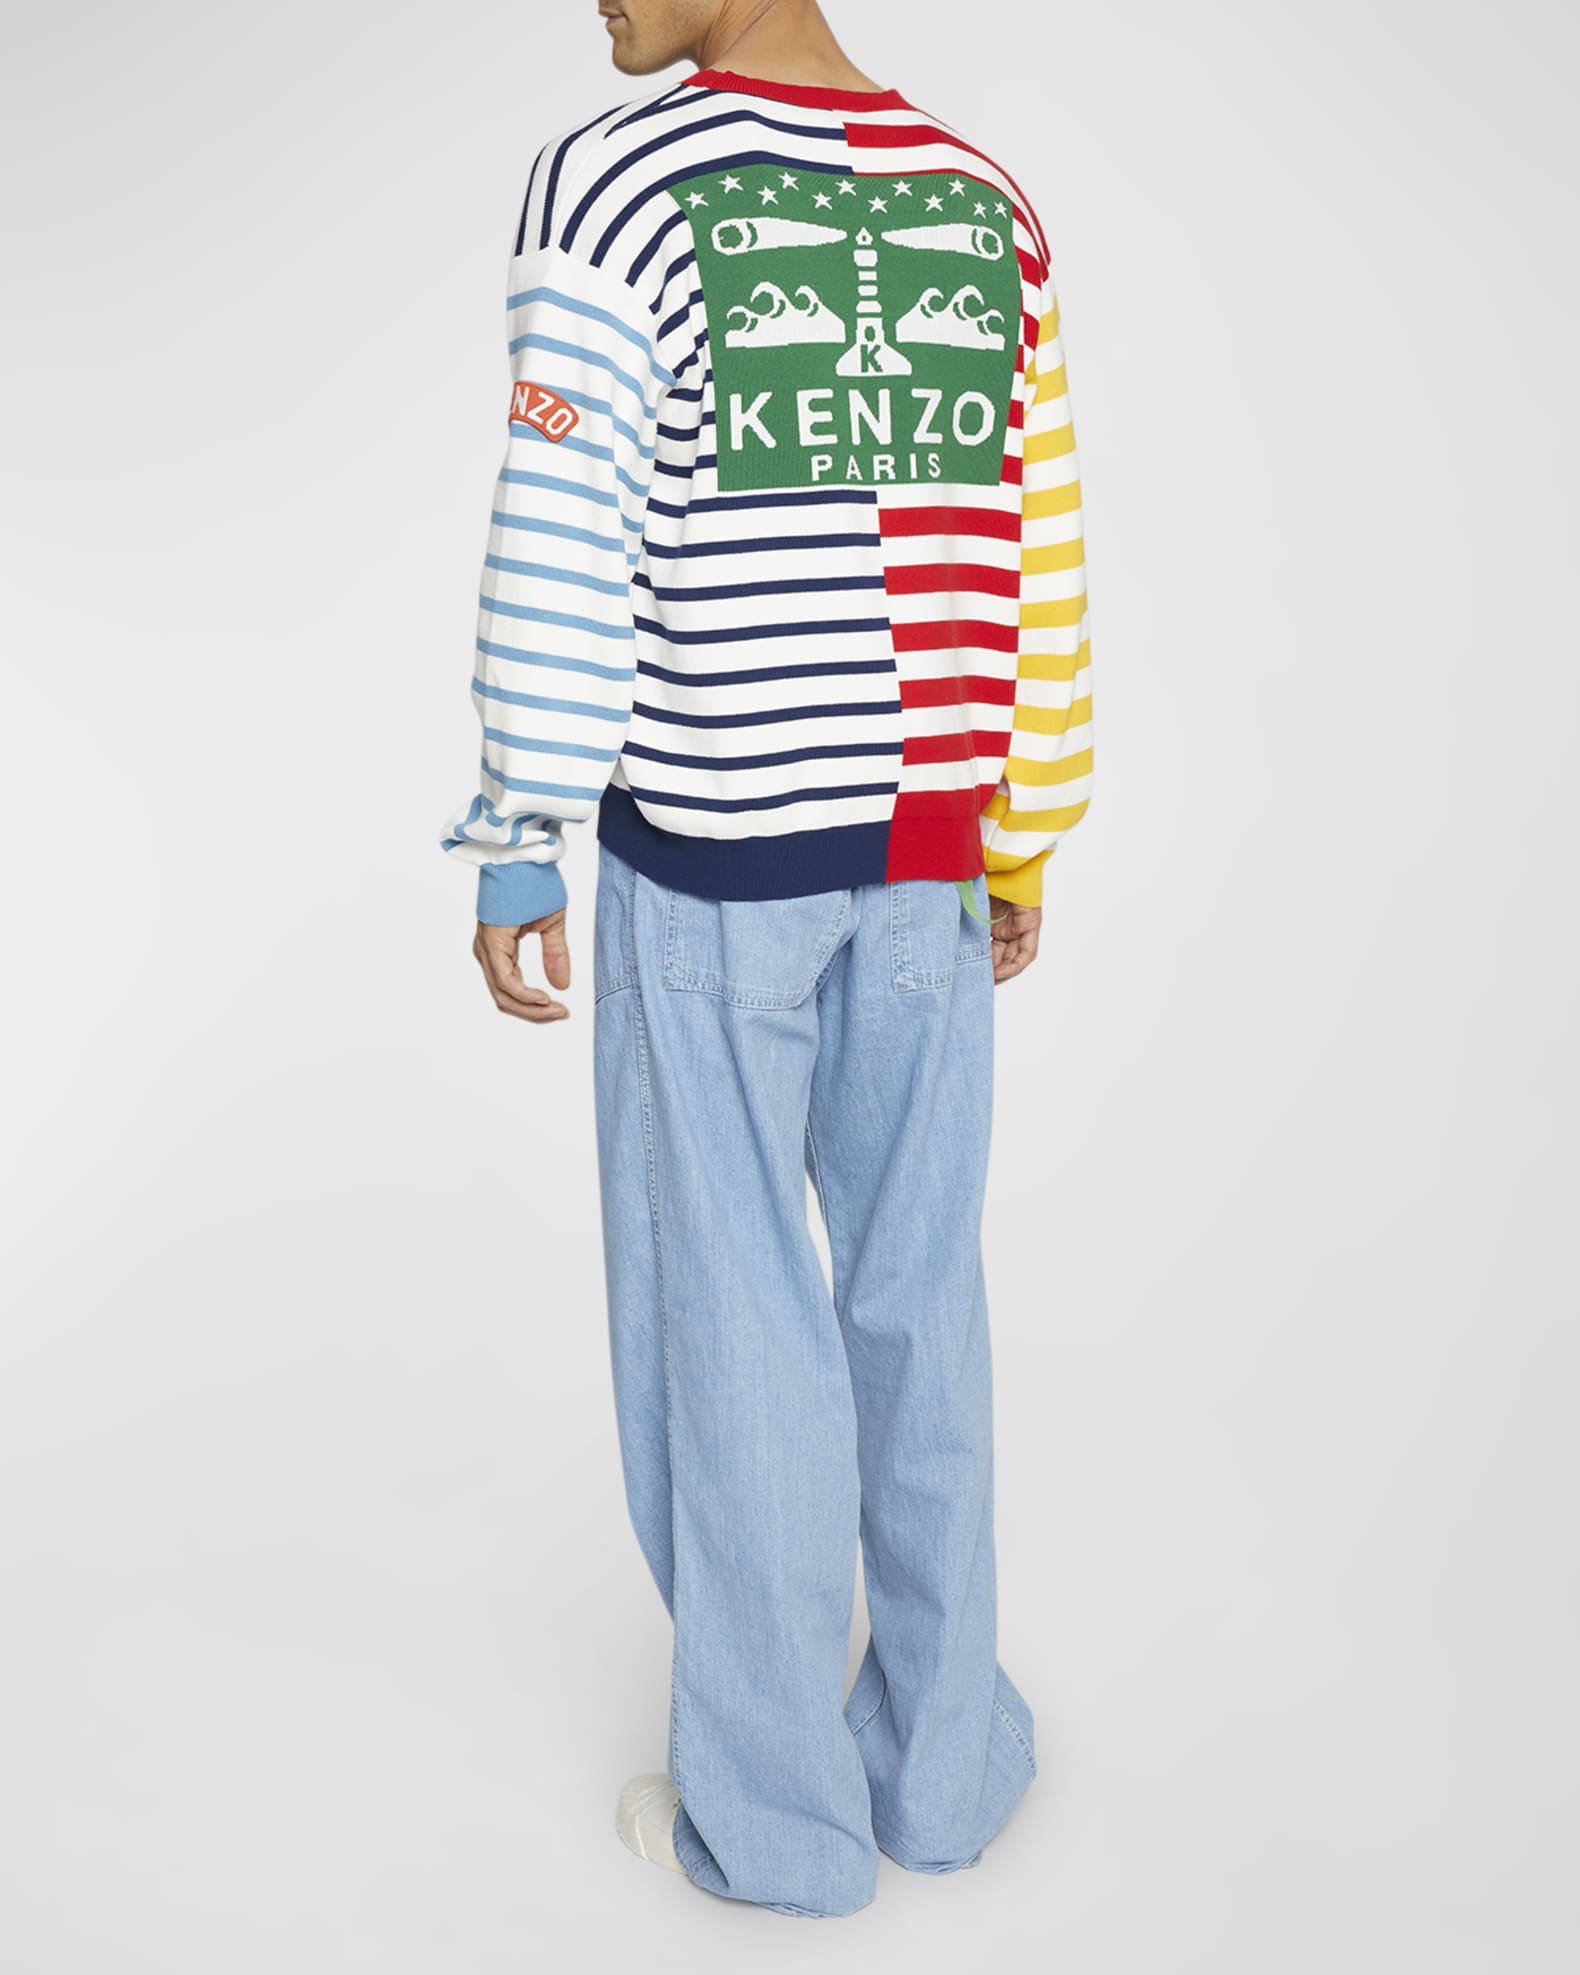 Kenzo Men's Graphic Nautical Striped Sweater | Neiman Marcus